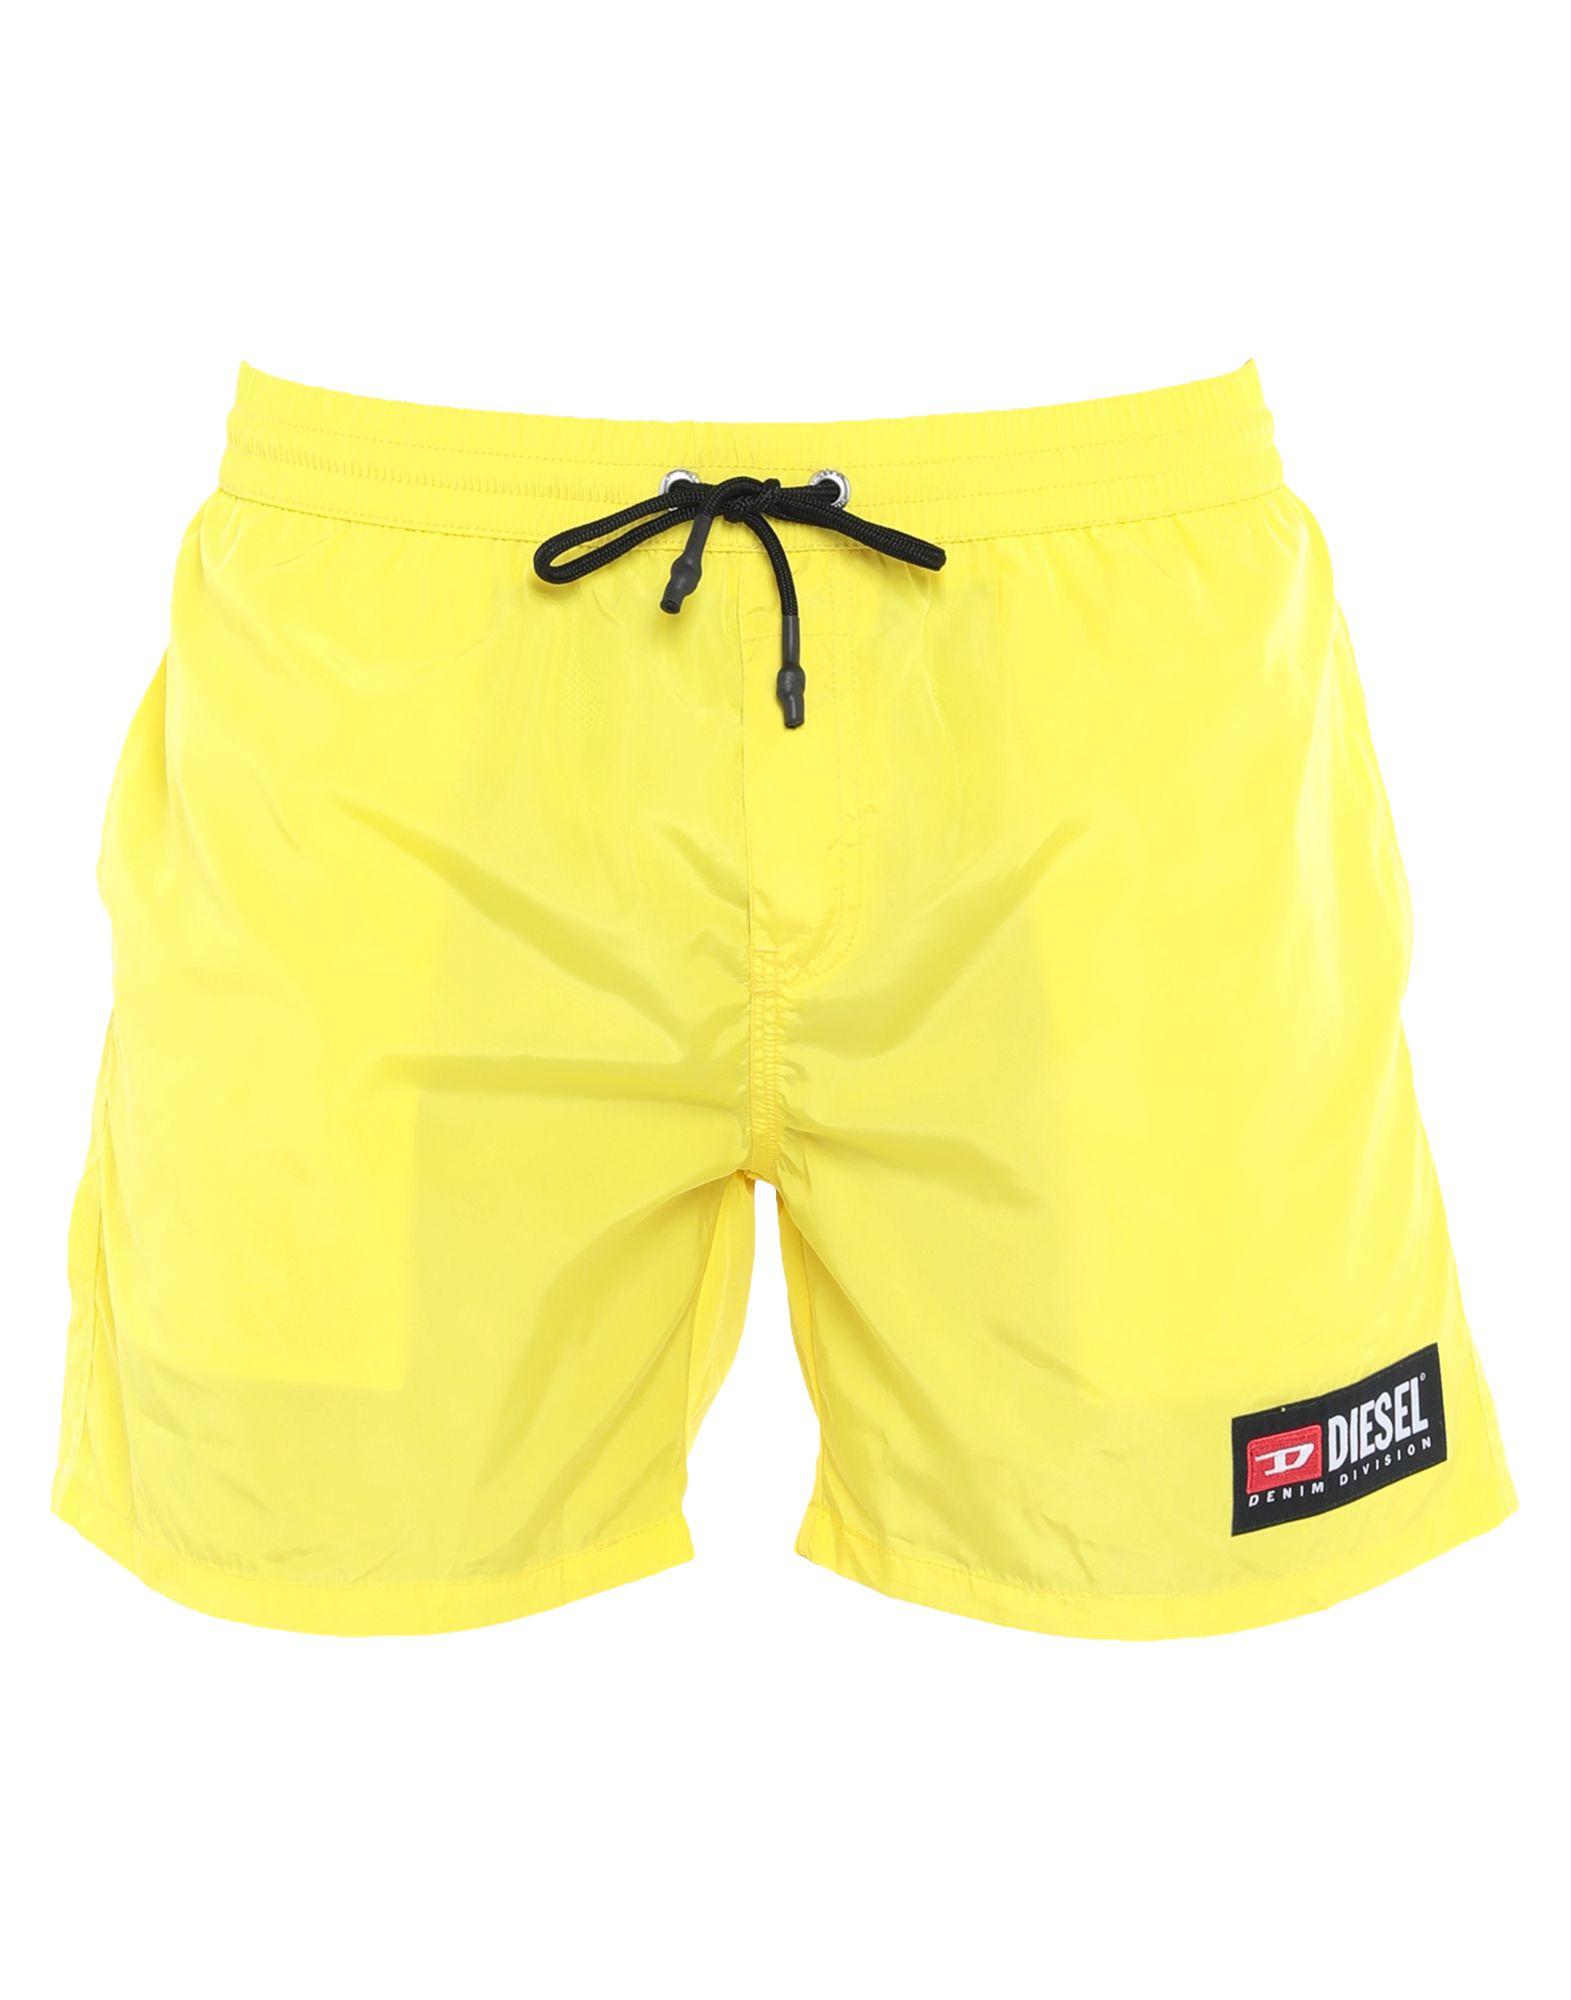 DIESEL Swim Trunks in Yellow for Men - Lyst